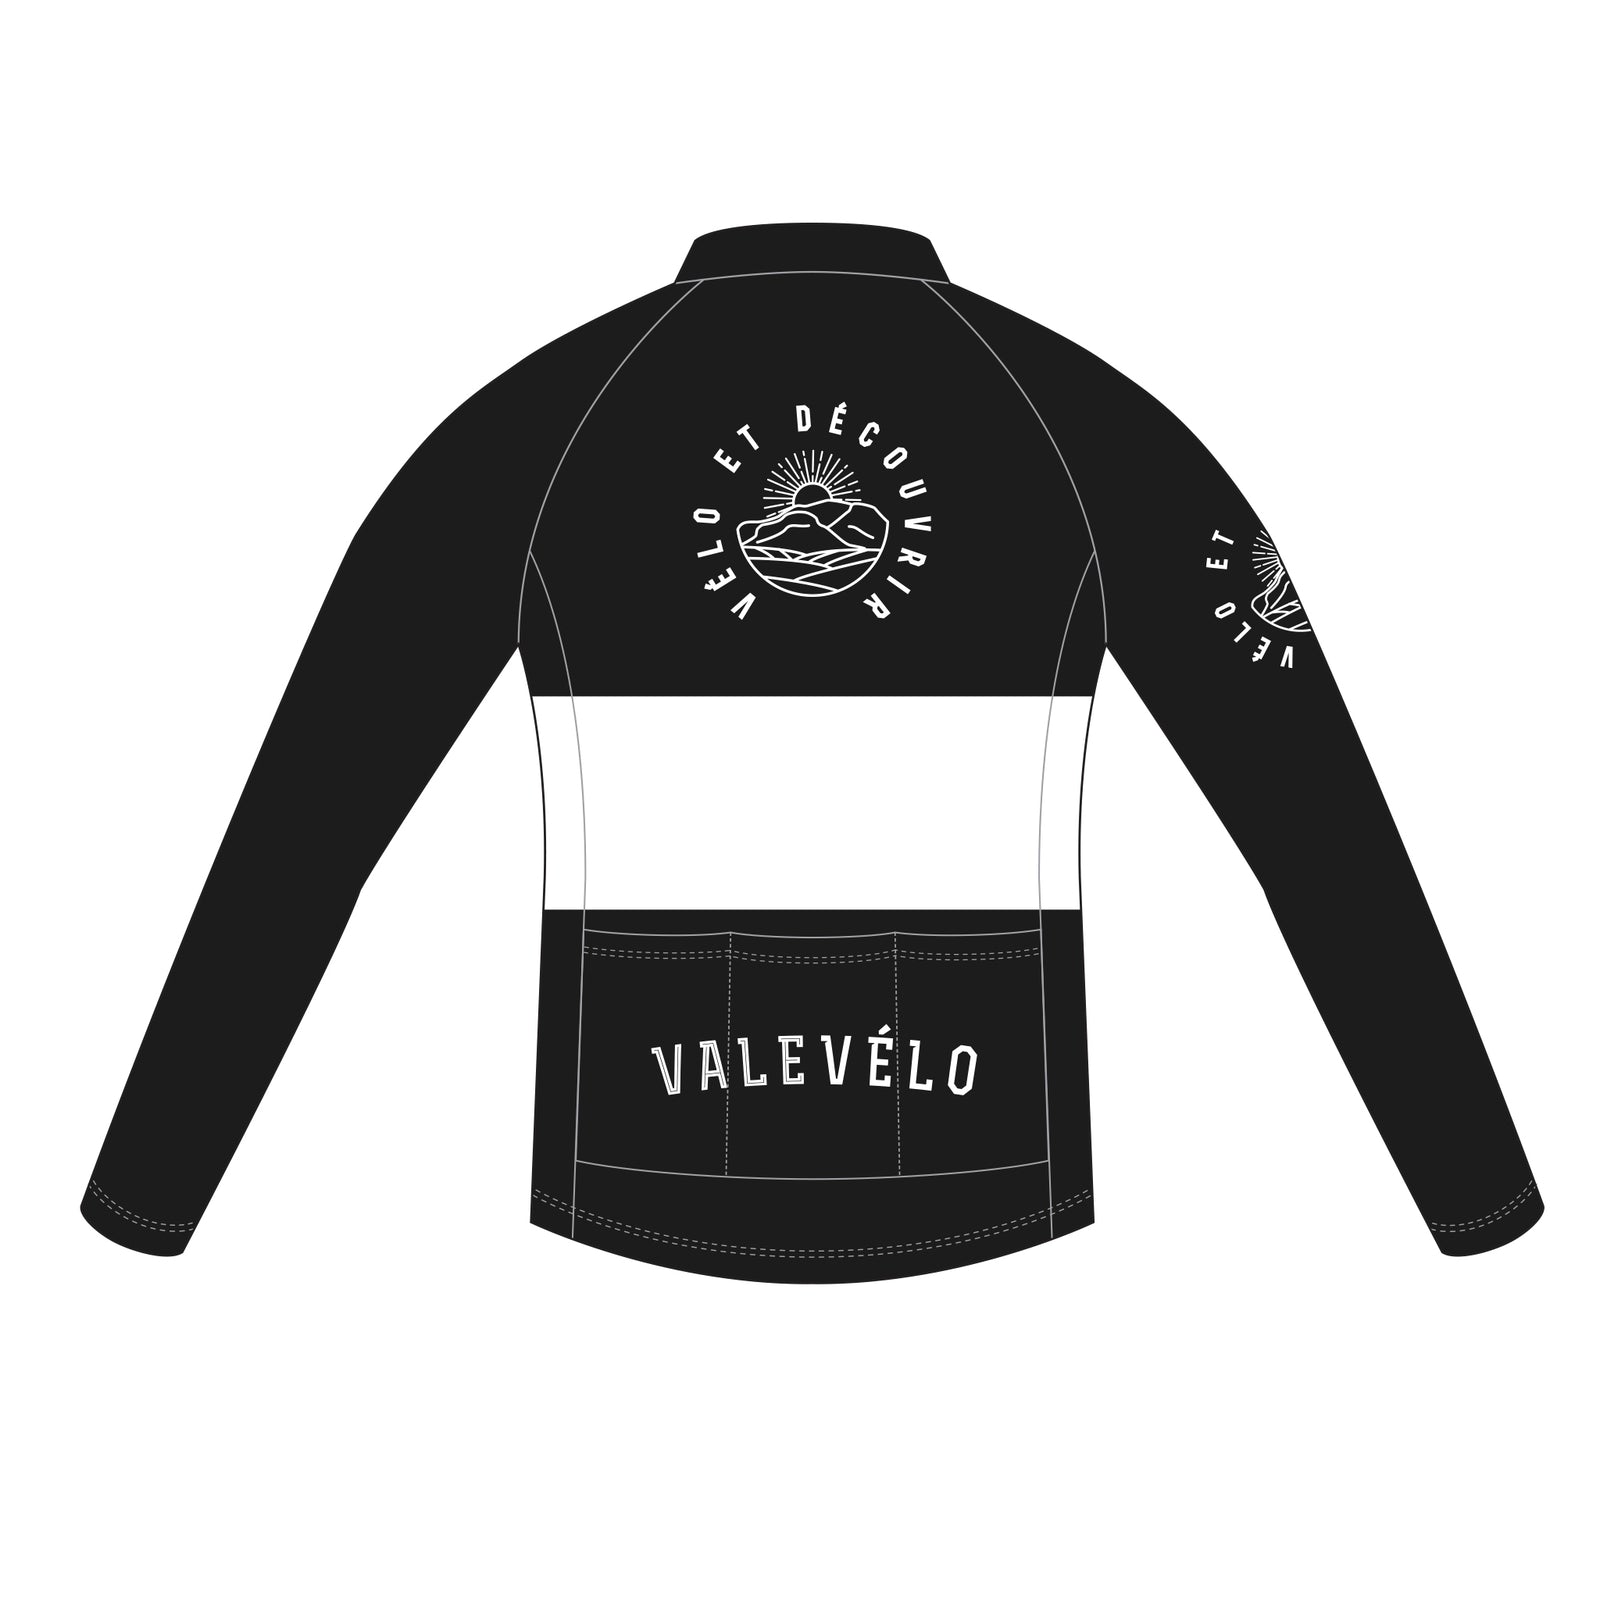 VALEVELO Men’s Race Cut PLATINUM Thermal Long Sleeve Cycling Jersey, BLACK